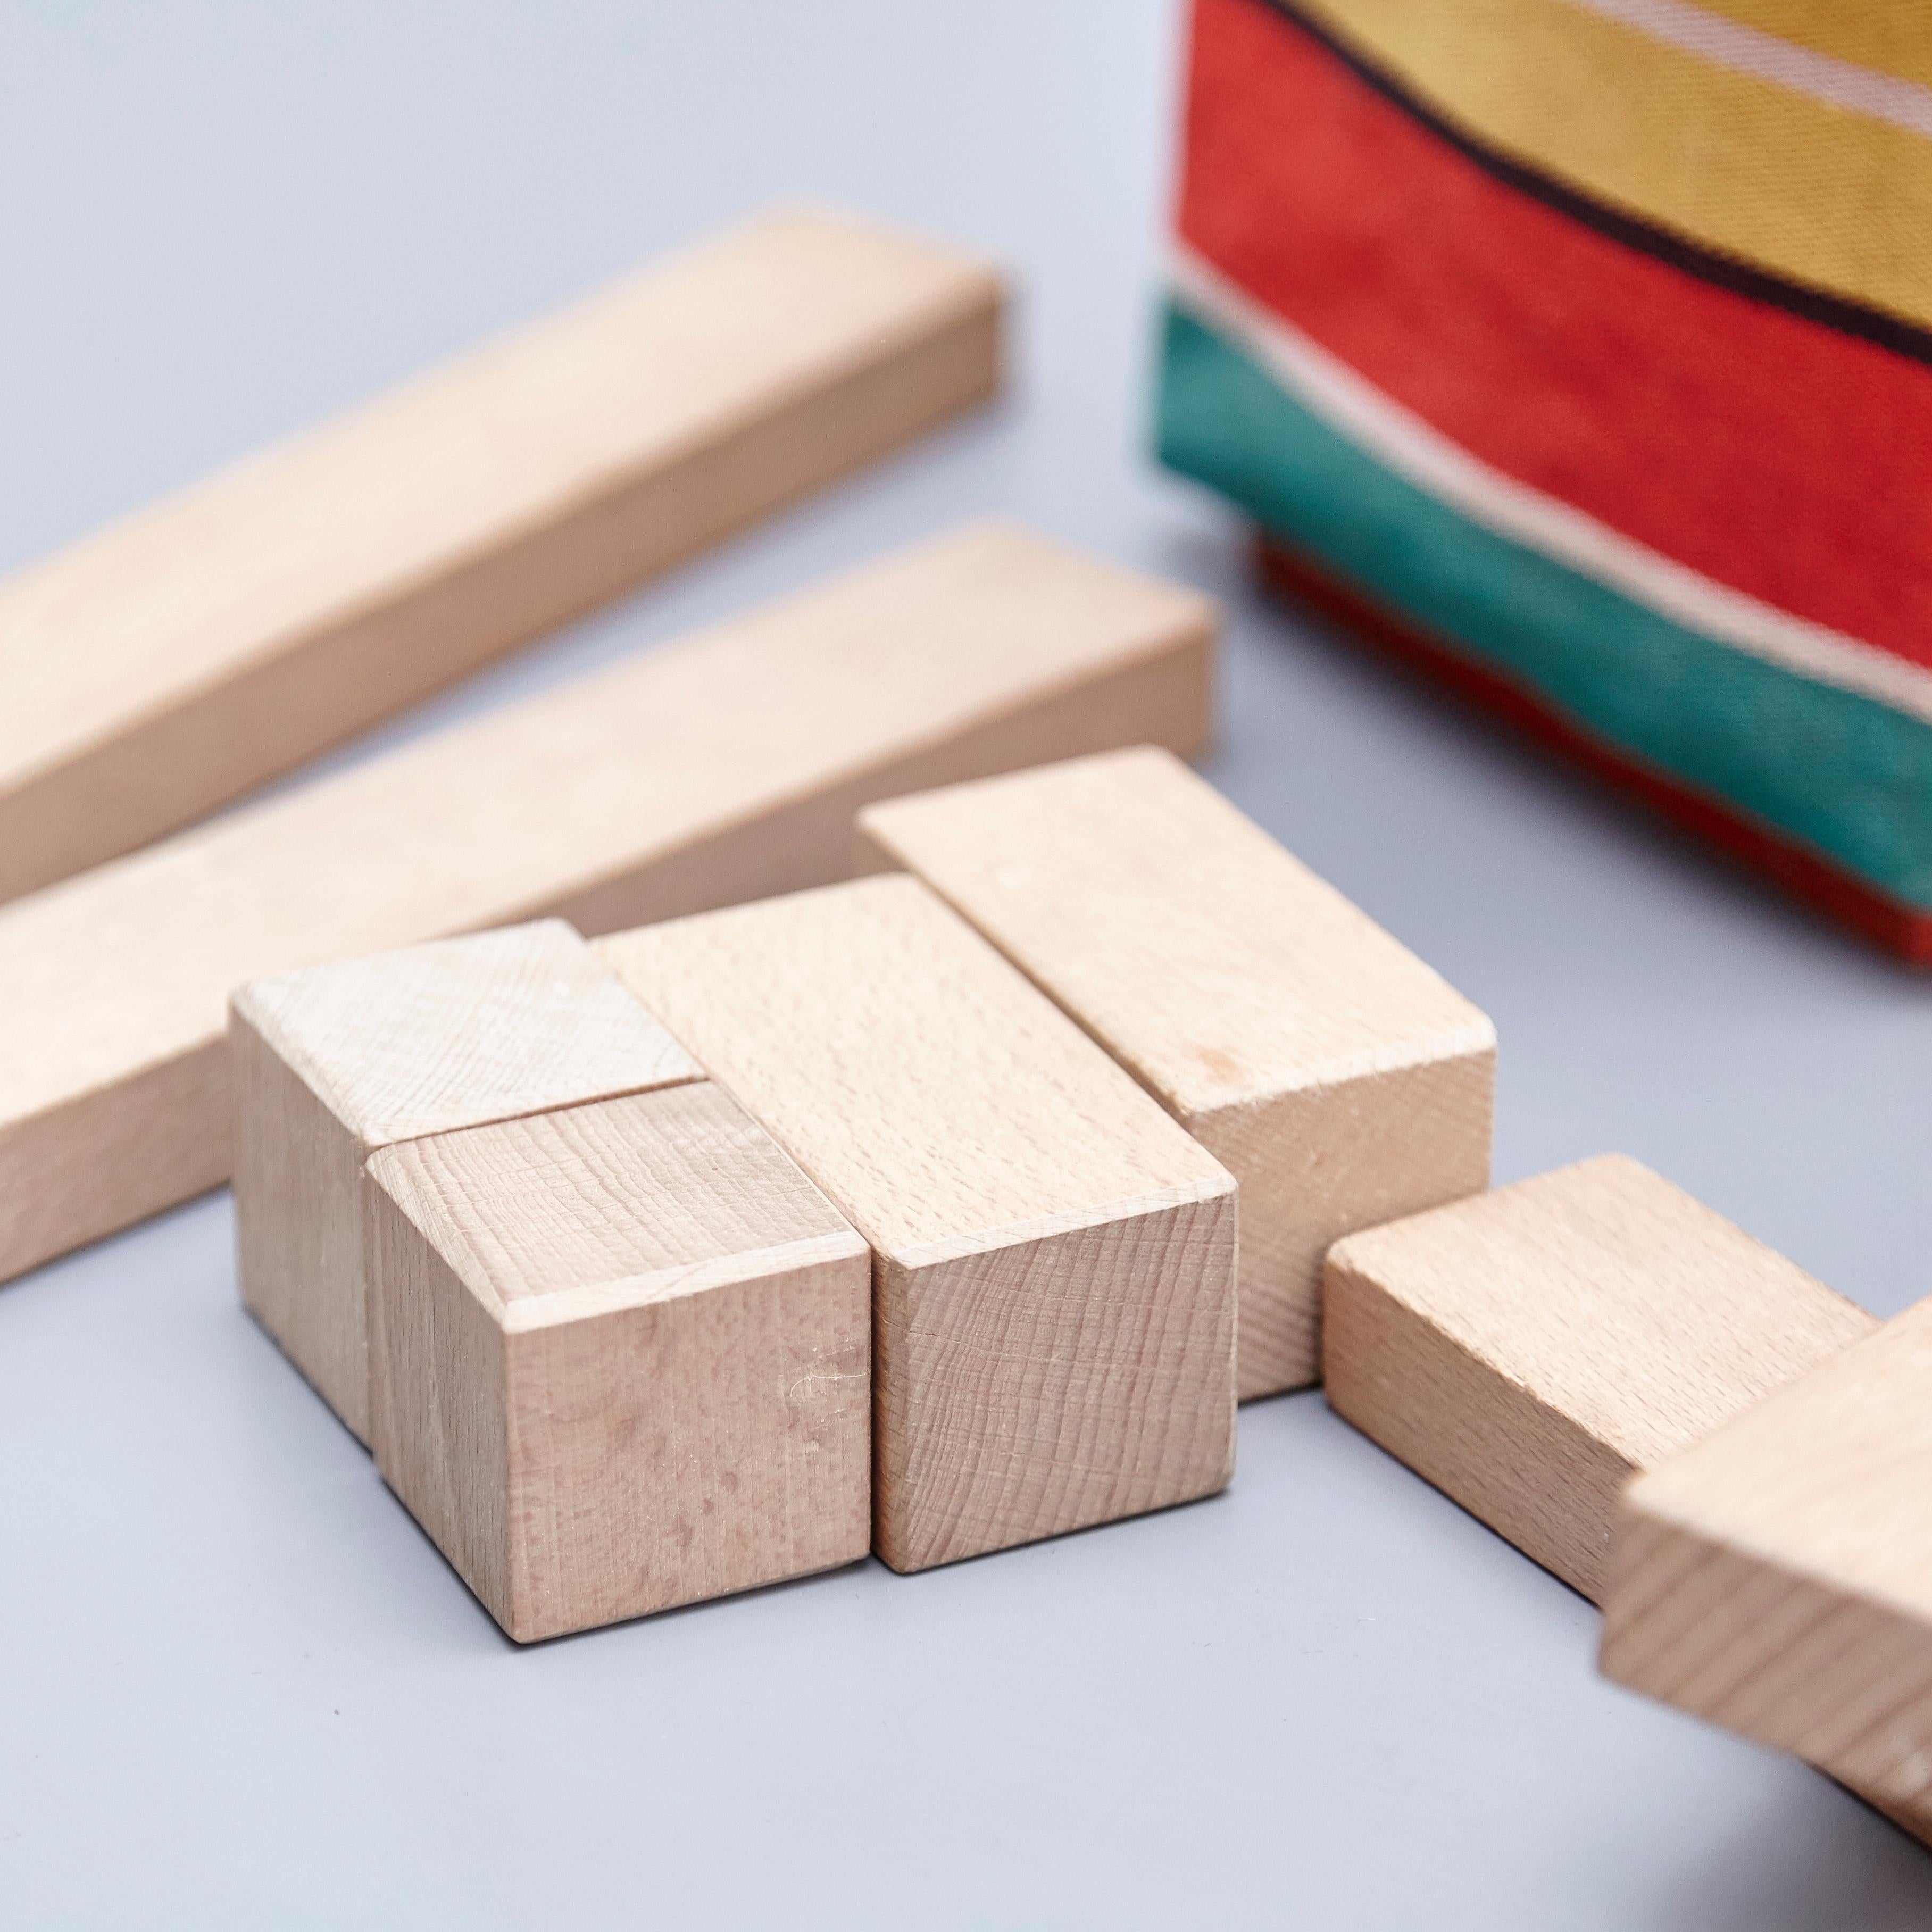 Canvas Ko Verzuu for Ado, Mid-Century Modern, Wood Blocks Construction Netherlands Toy